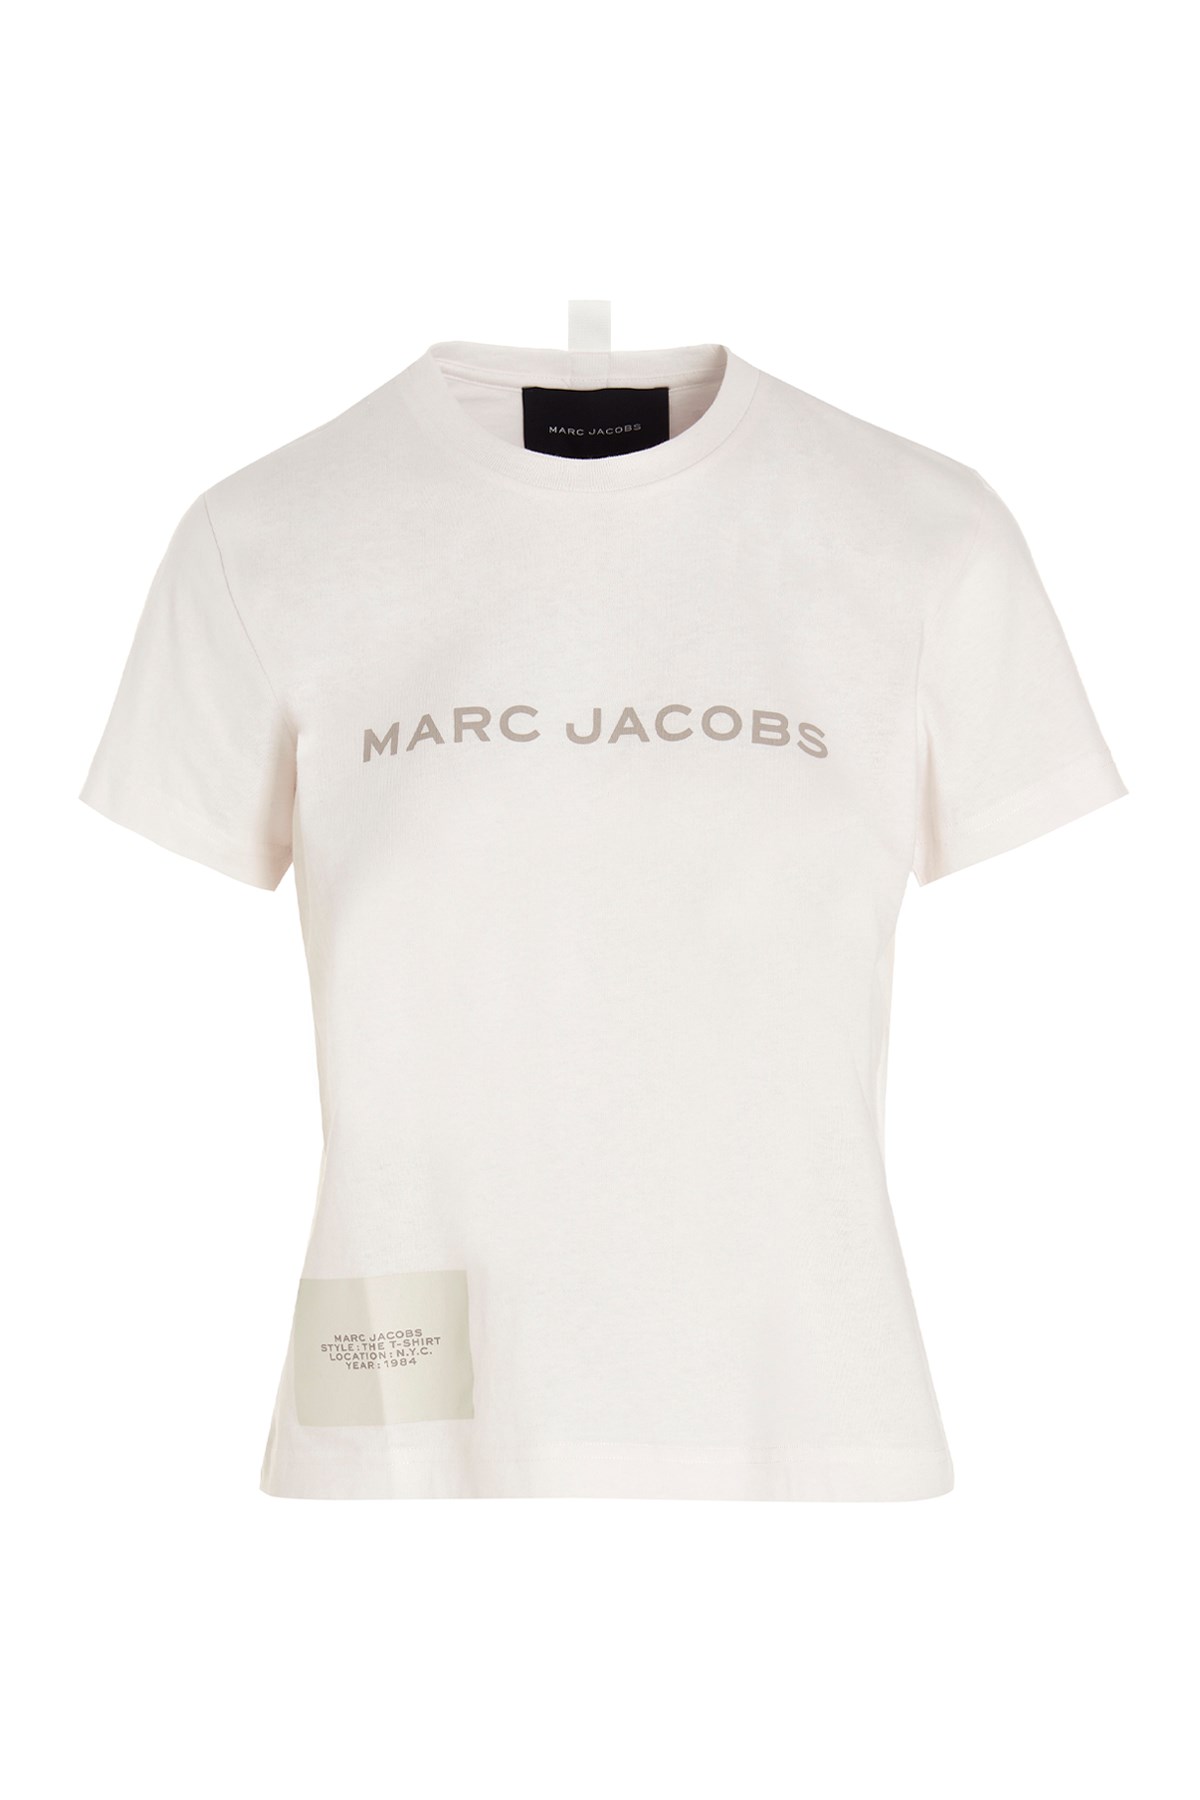 MARC JACOBS Logo Print T-Shirt